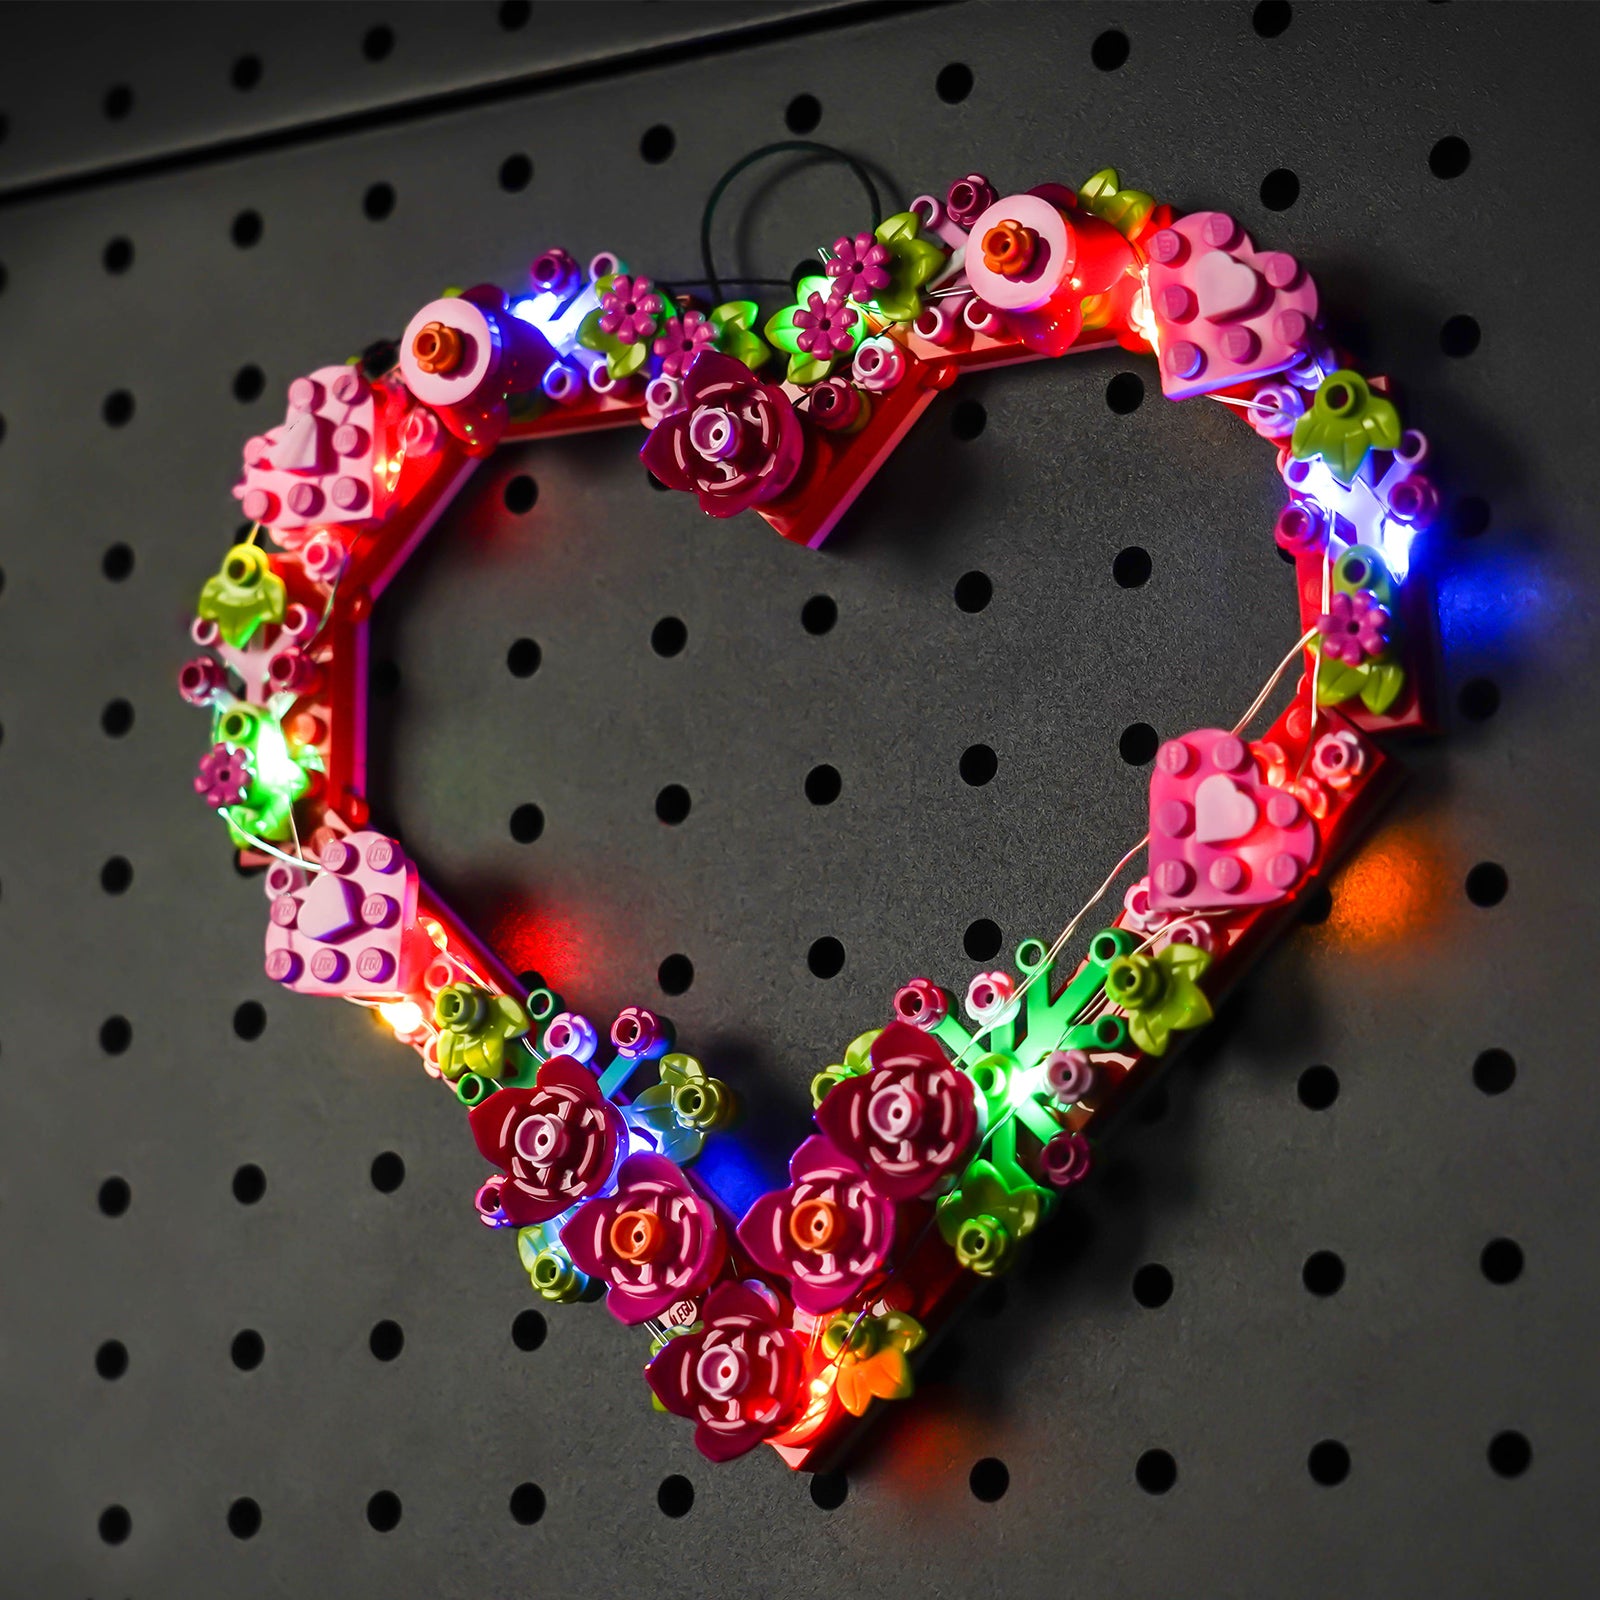 LEGO Heart Ornament 40638 Light